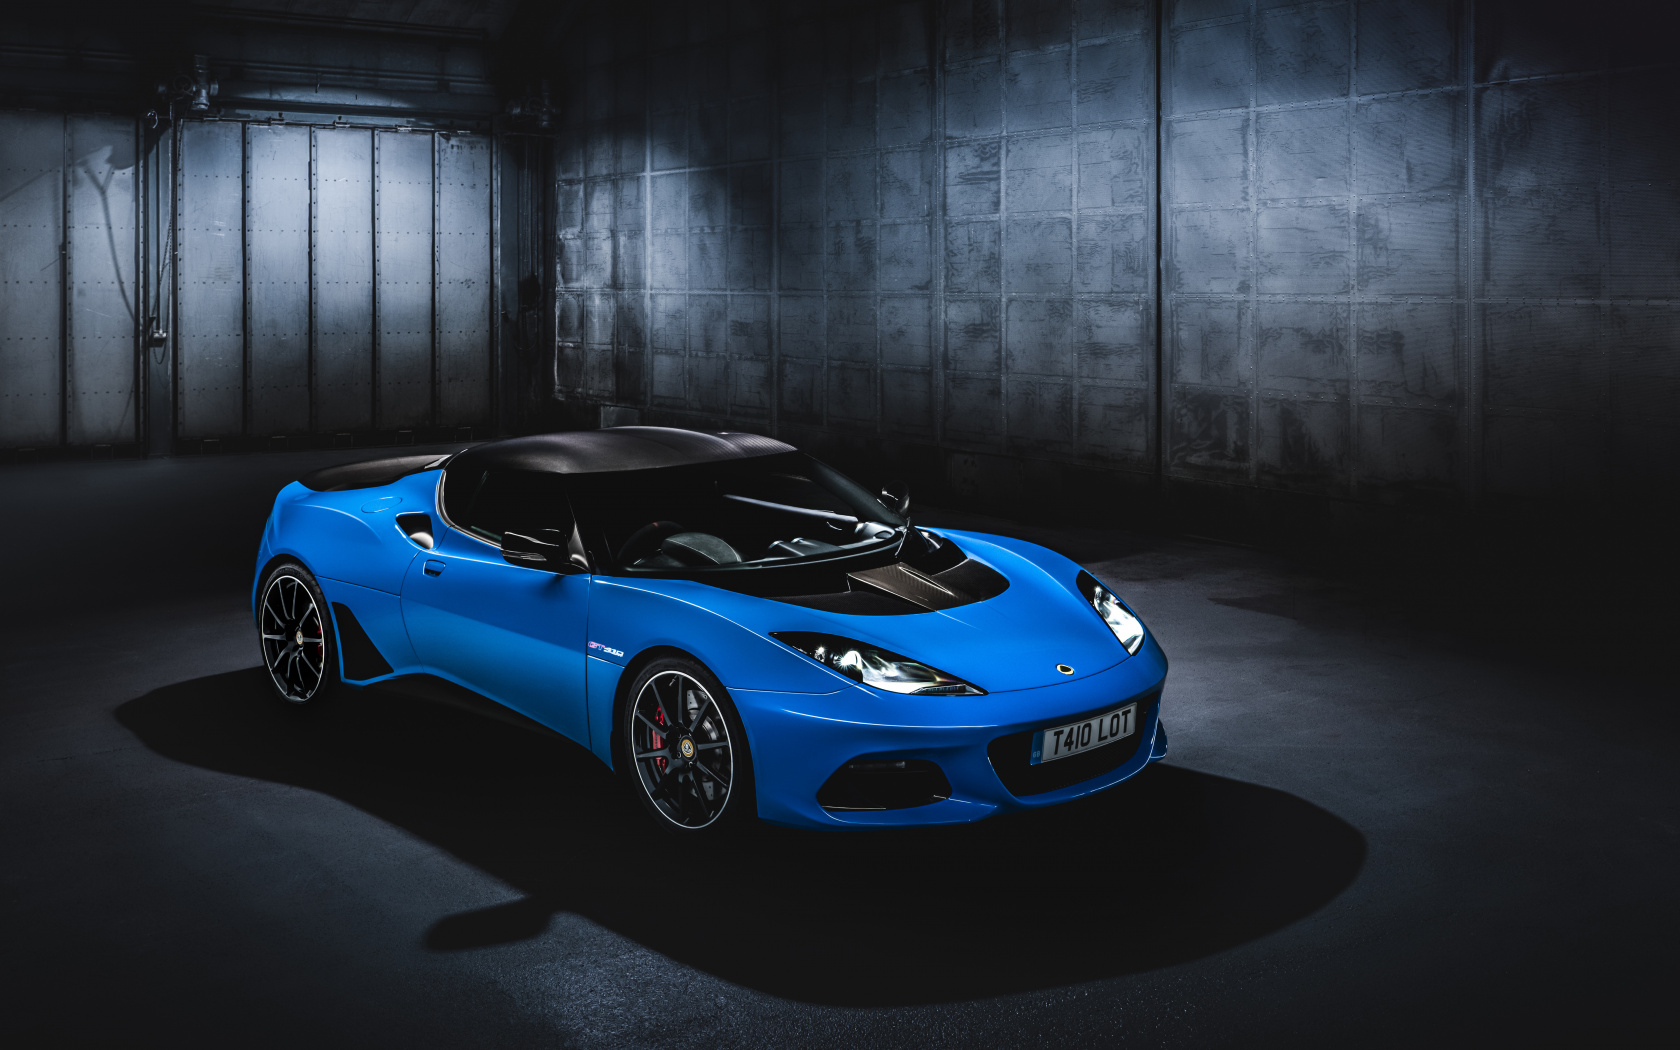 Lotus Evora Gt Blue Sport Car Wallpaper